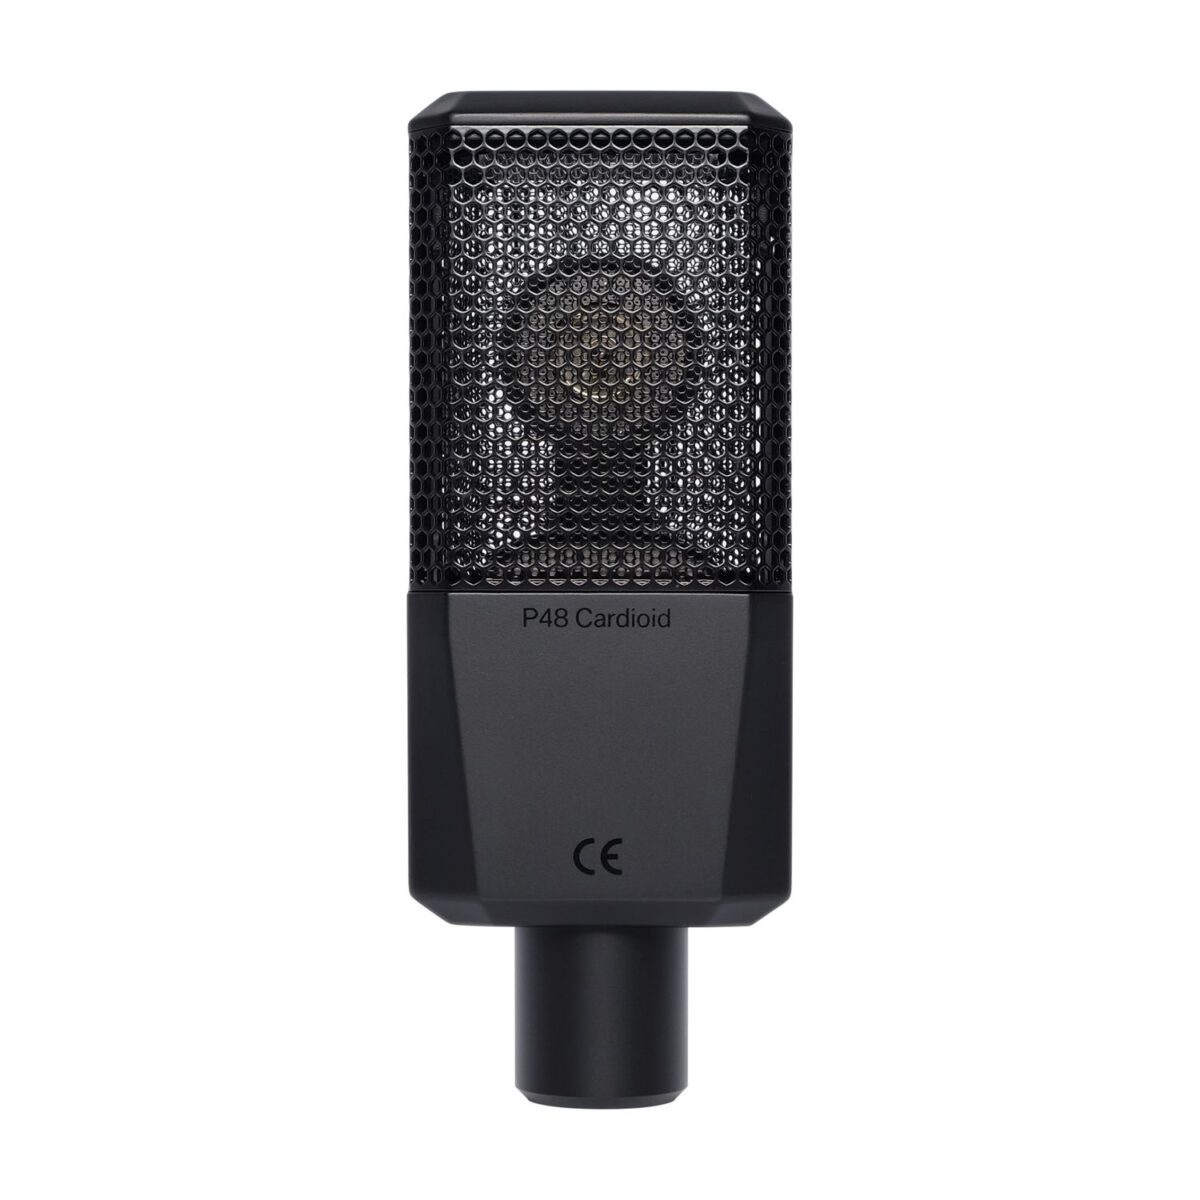 Lewitt LCT-240 Pro Condenser Microphone (Black)